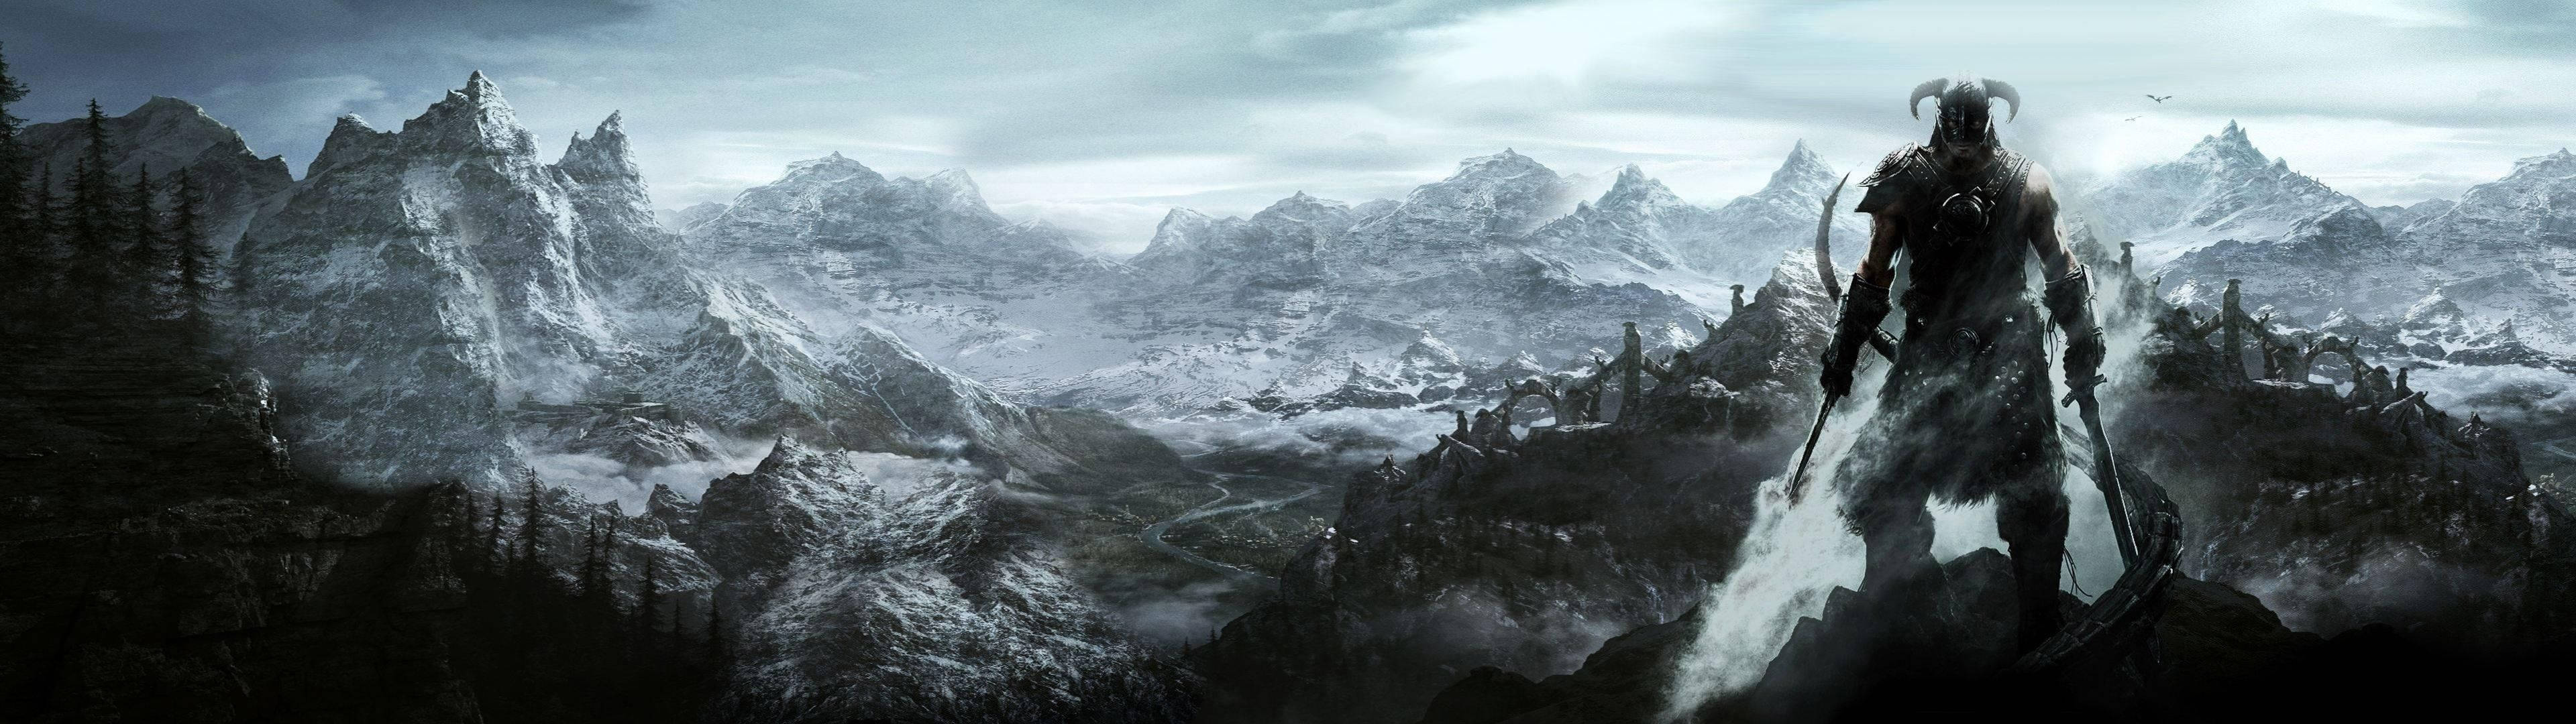 Skyrim Dragonborn Dual Screen Background